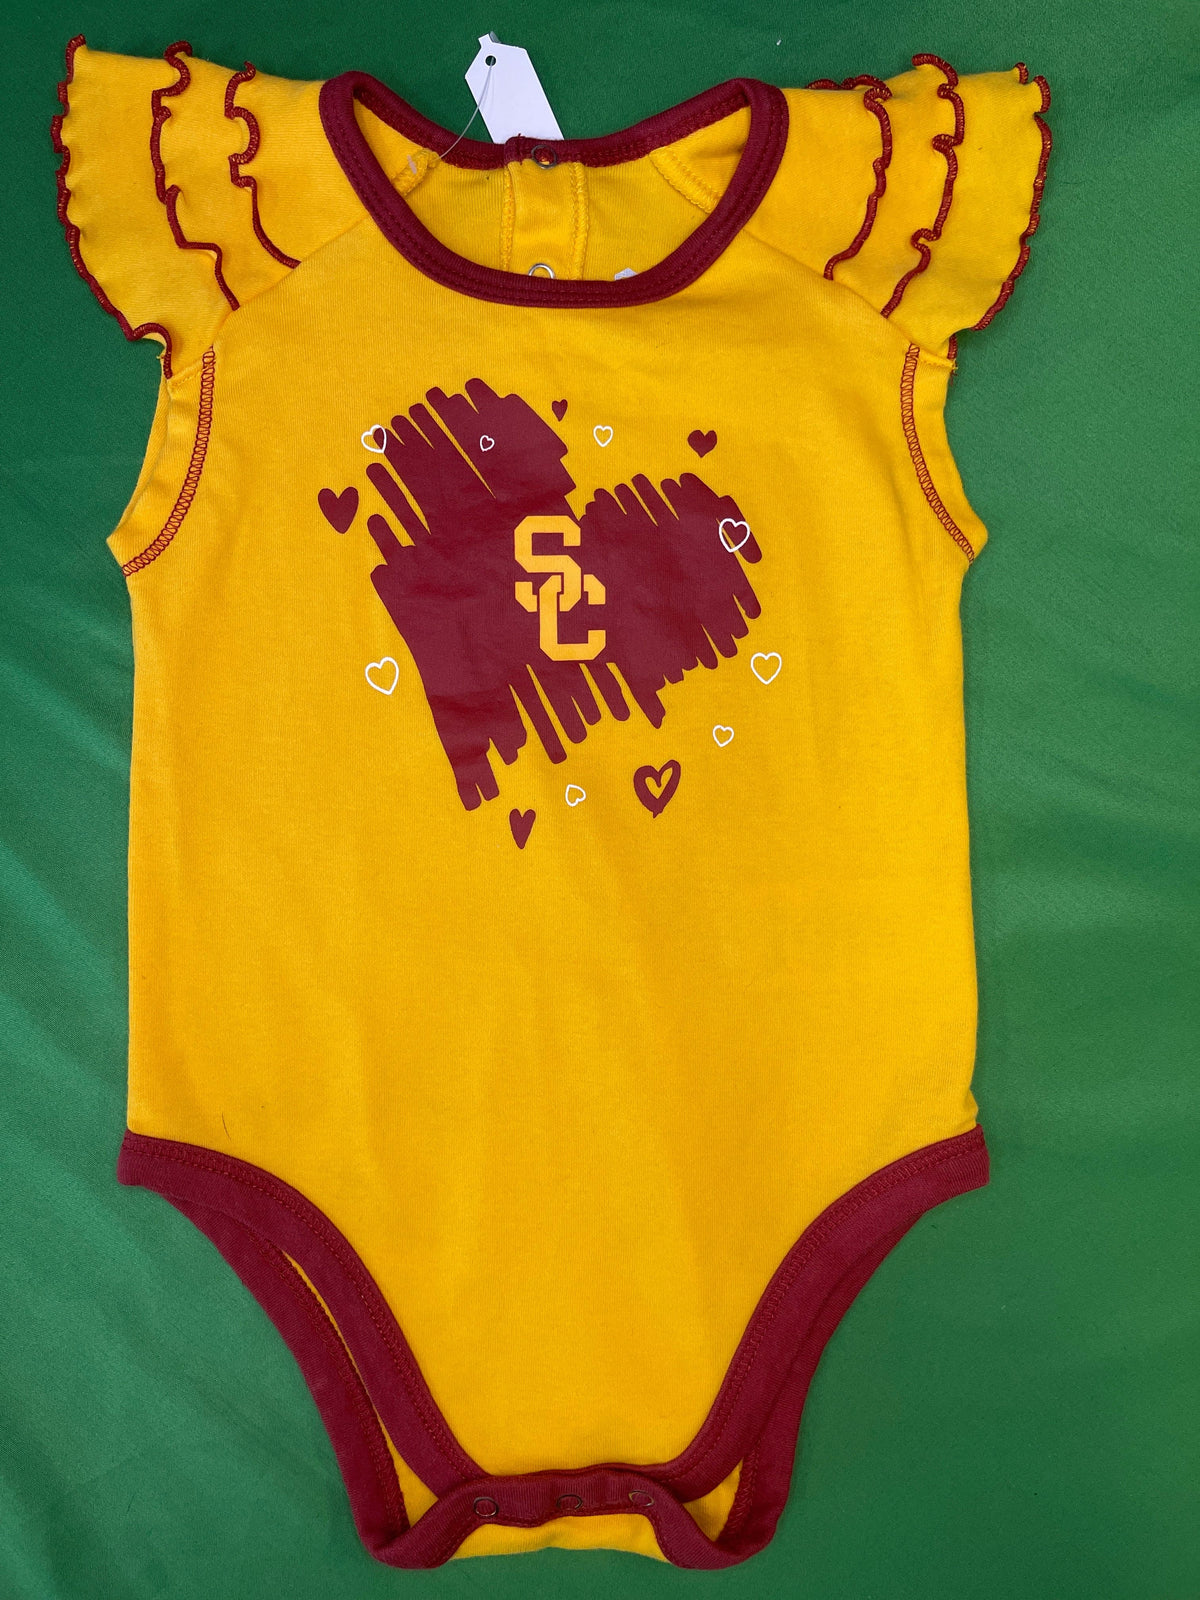 NCAA USC Trojans Baby Bodysuit/Vest Girls' Toddler 18 Months